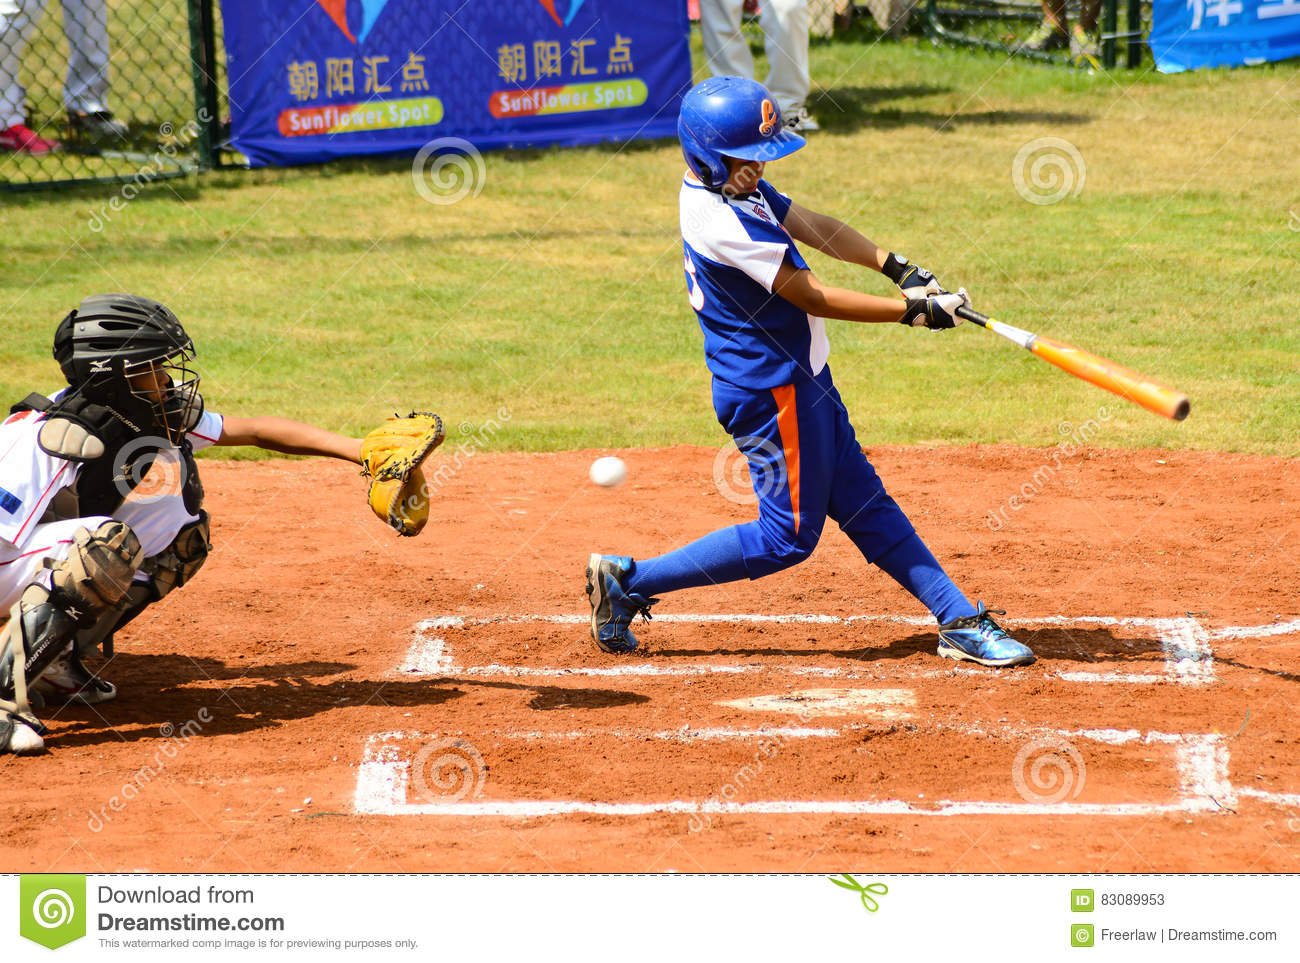 unknown-batter-just-missed-ball-baseball-game-zhongshan-guangdong-china-october-october-83089953.jpg